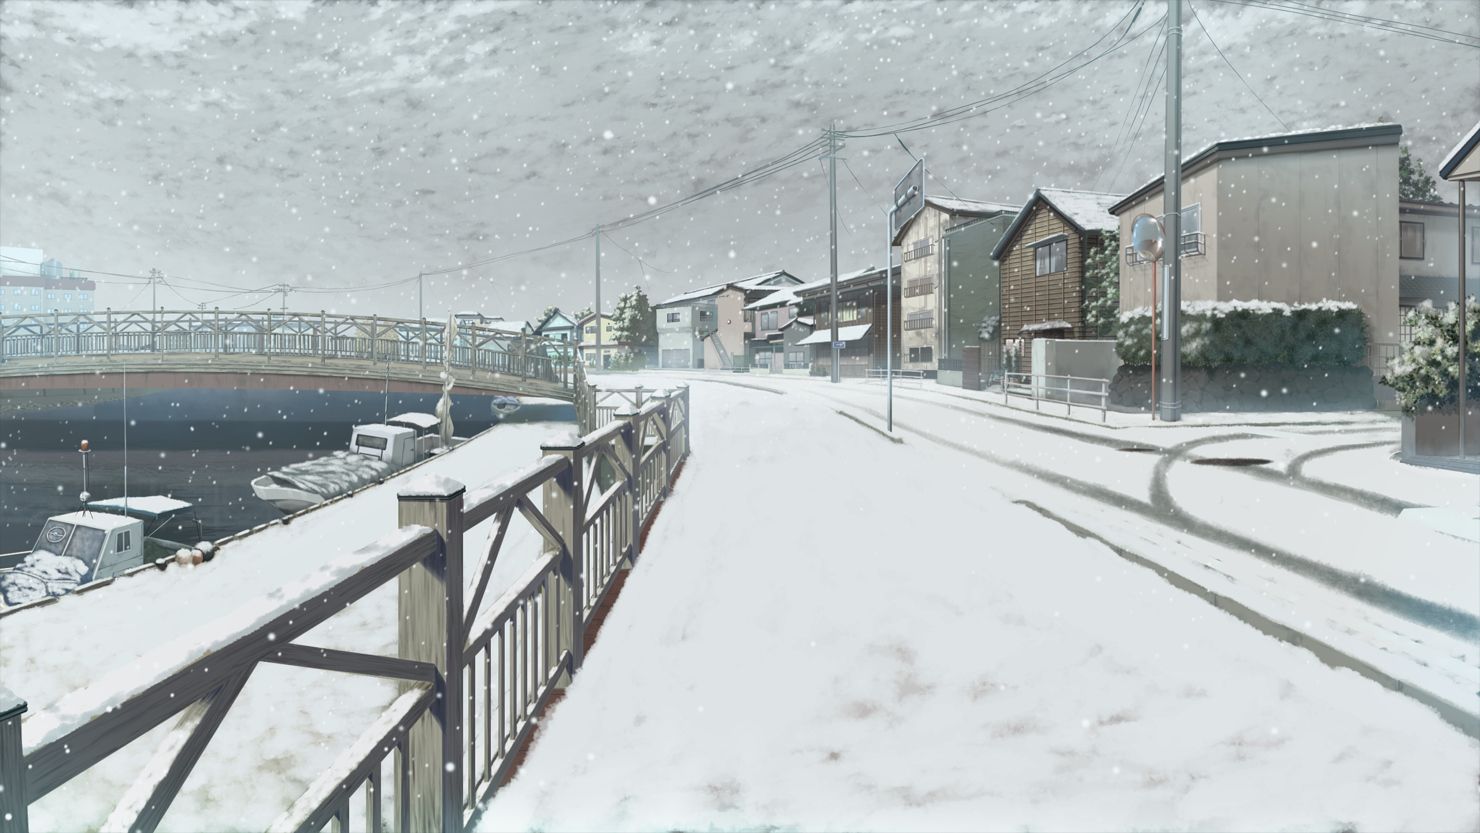 Snow Anime Images  Free Download on Freepik